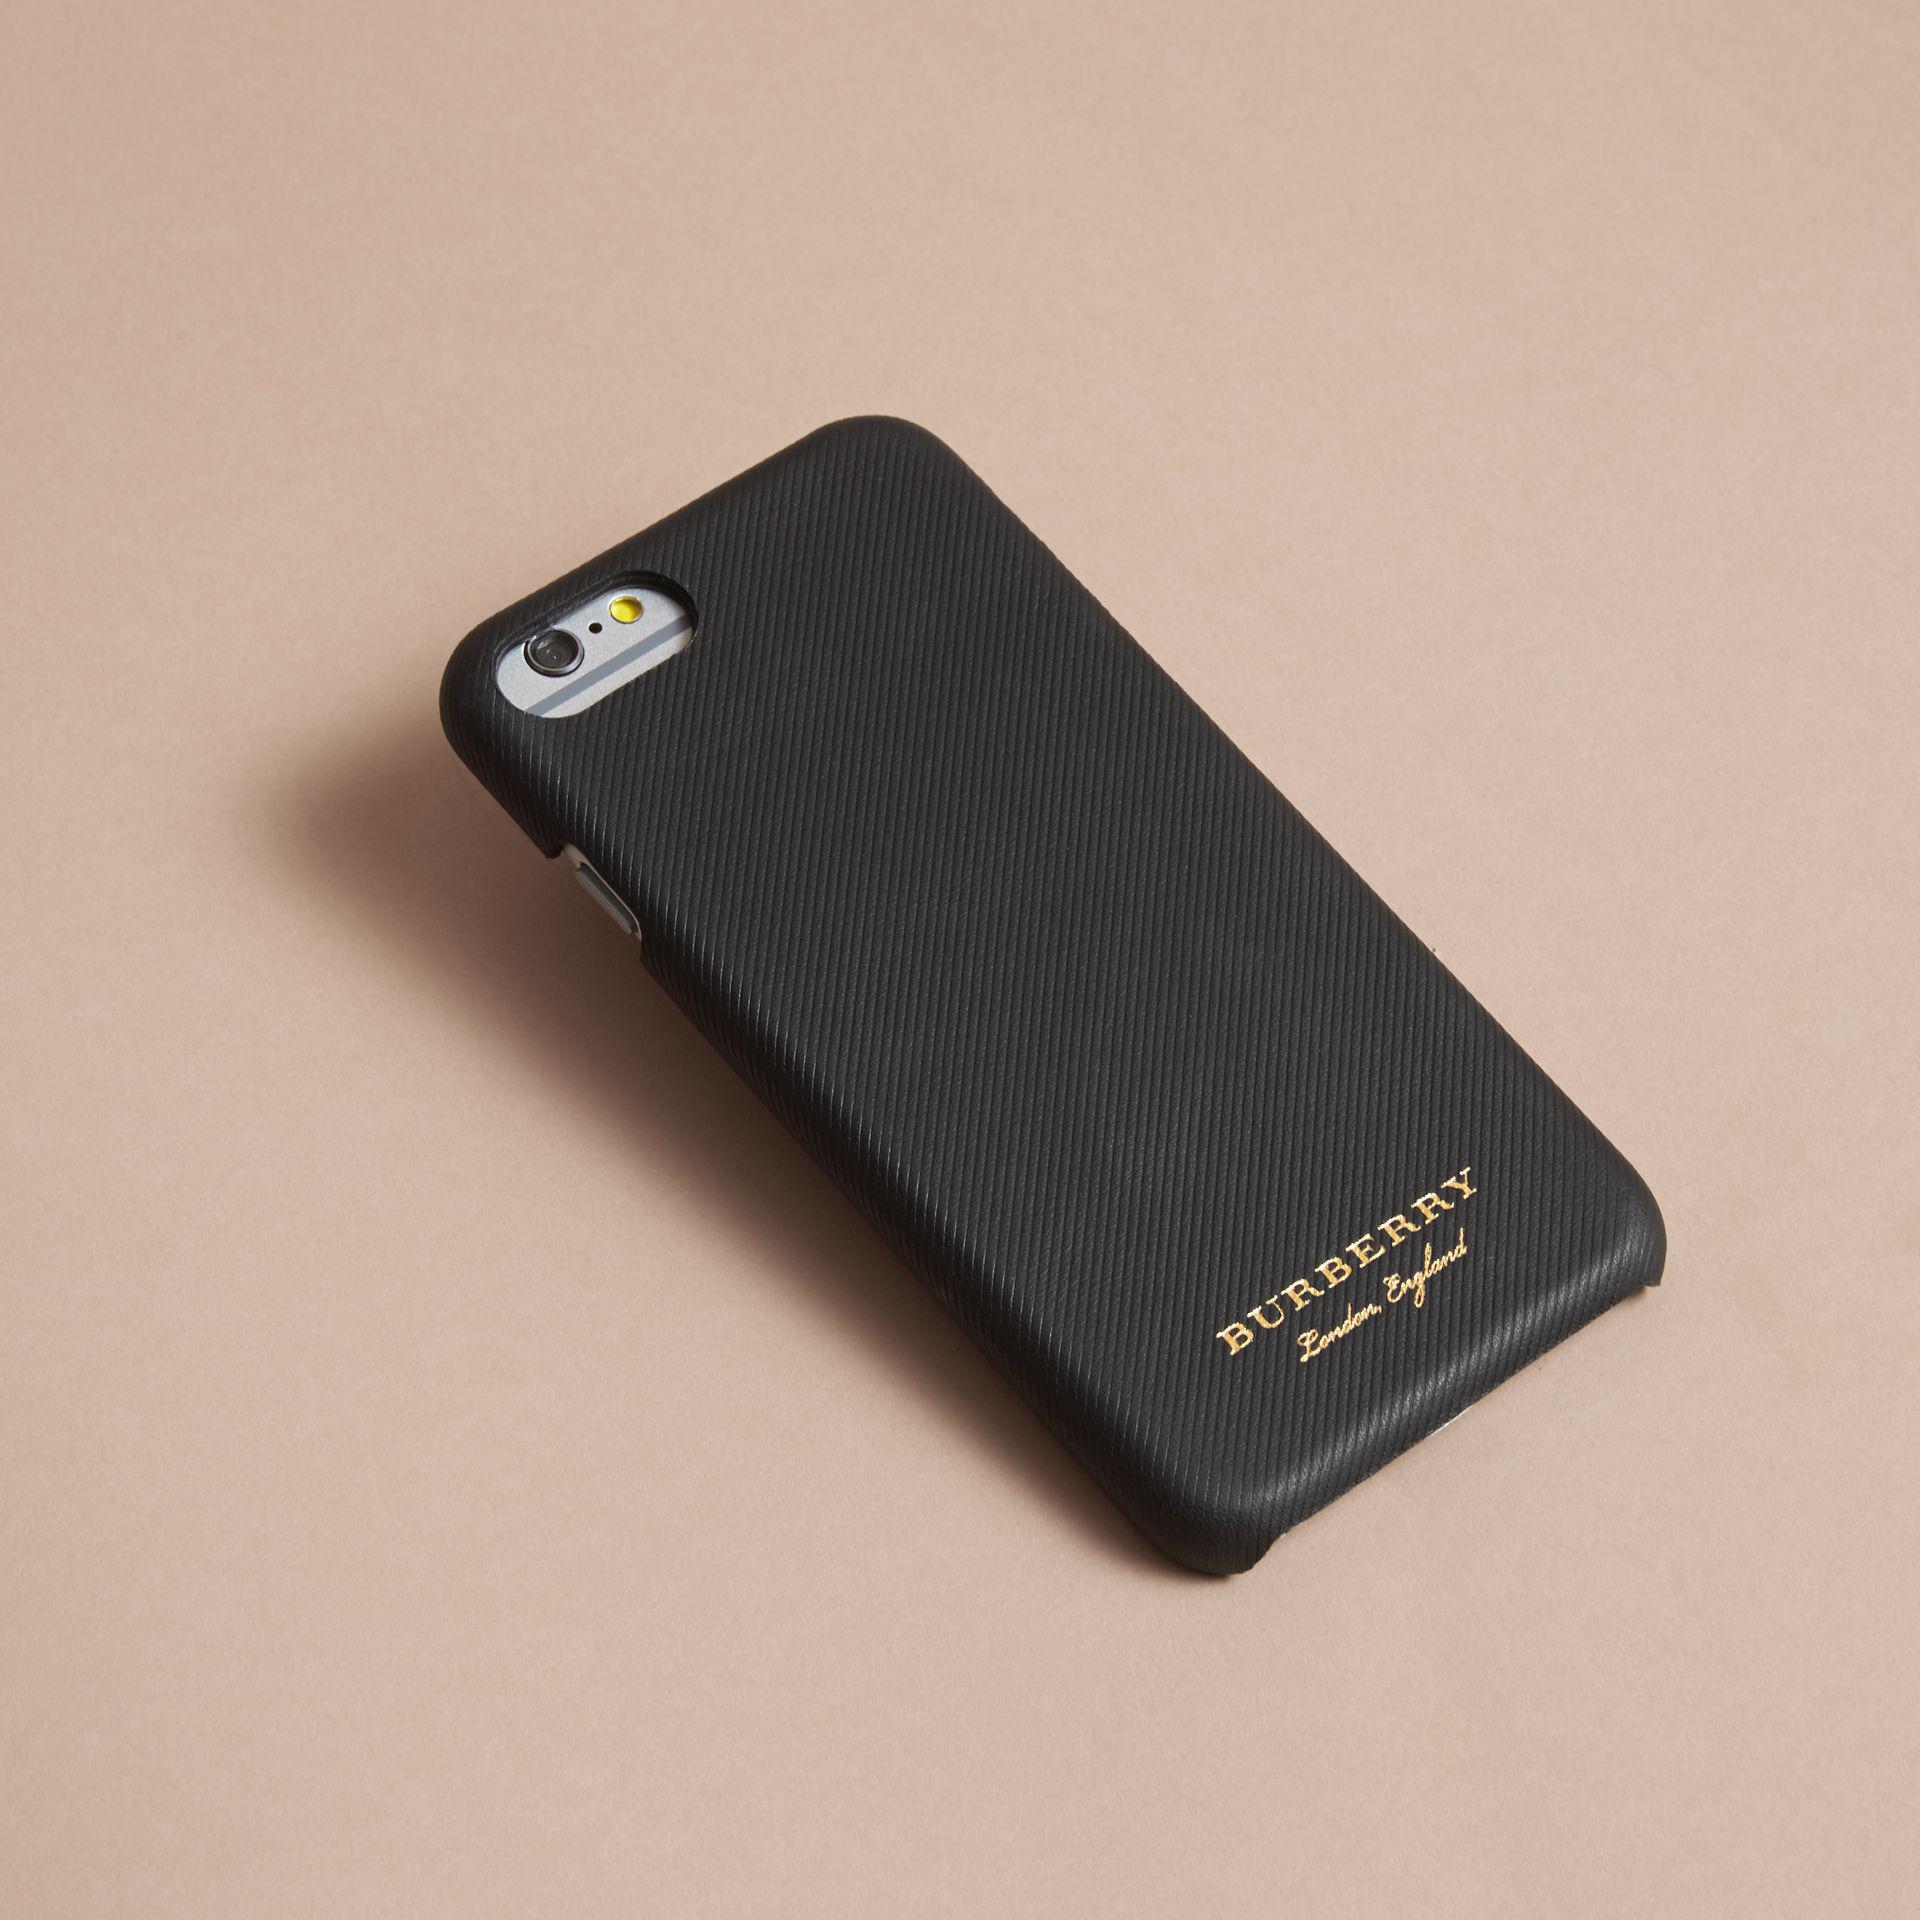 burberry phone case iphone 7